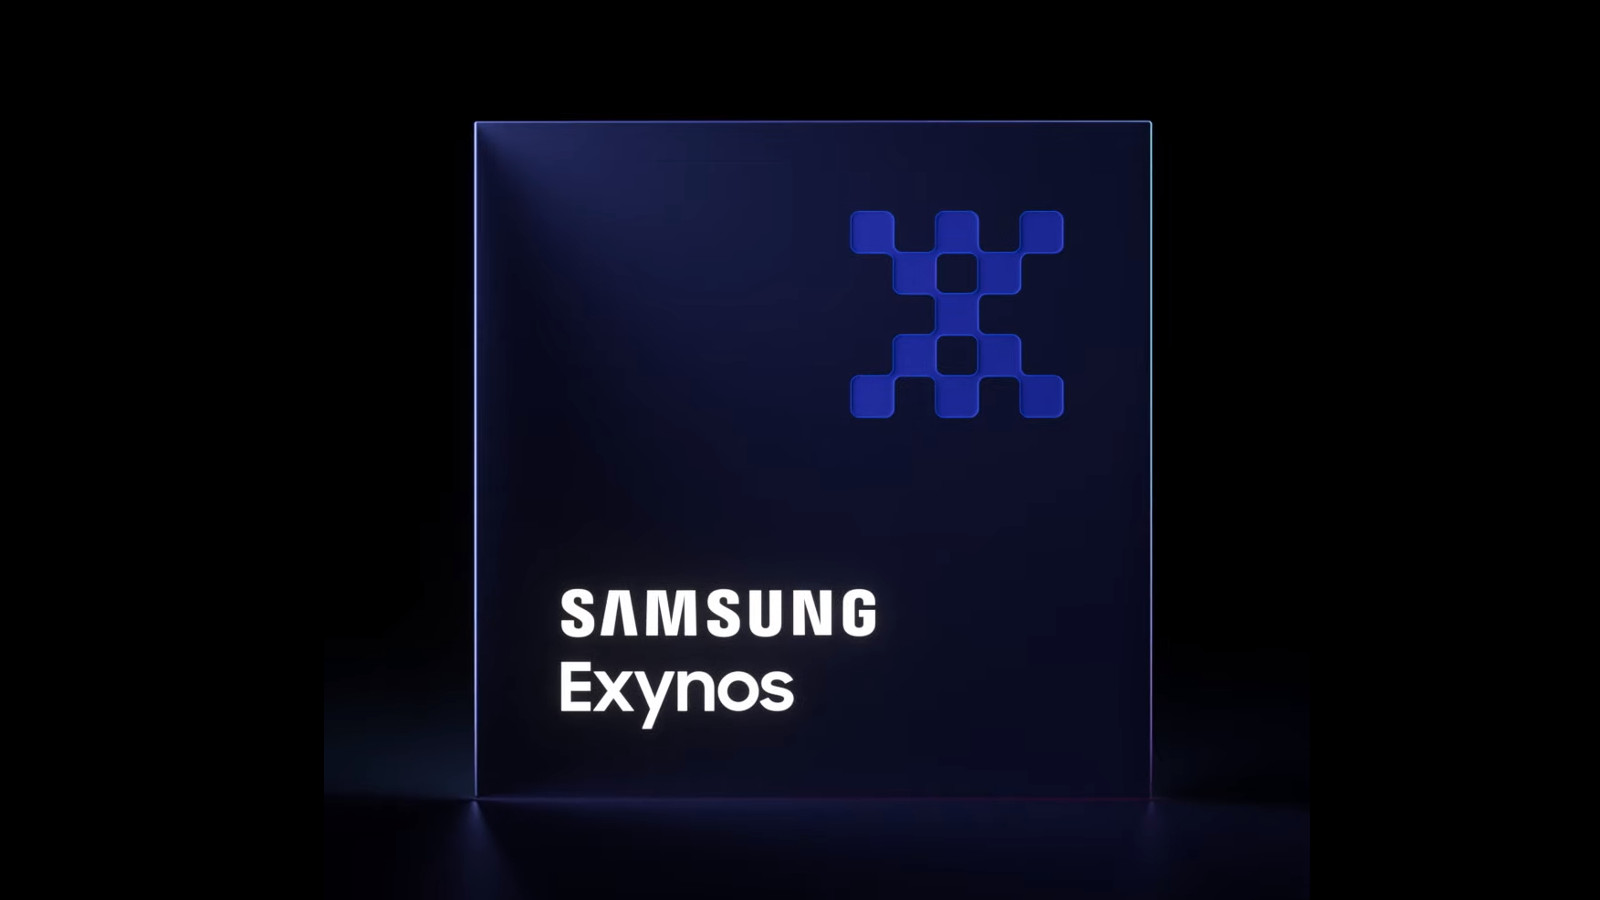 Samsung Exynos Brand